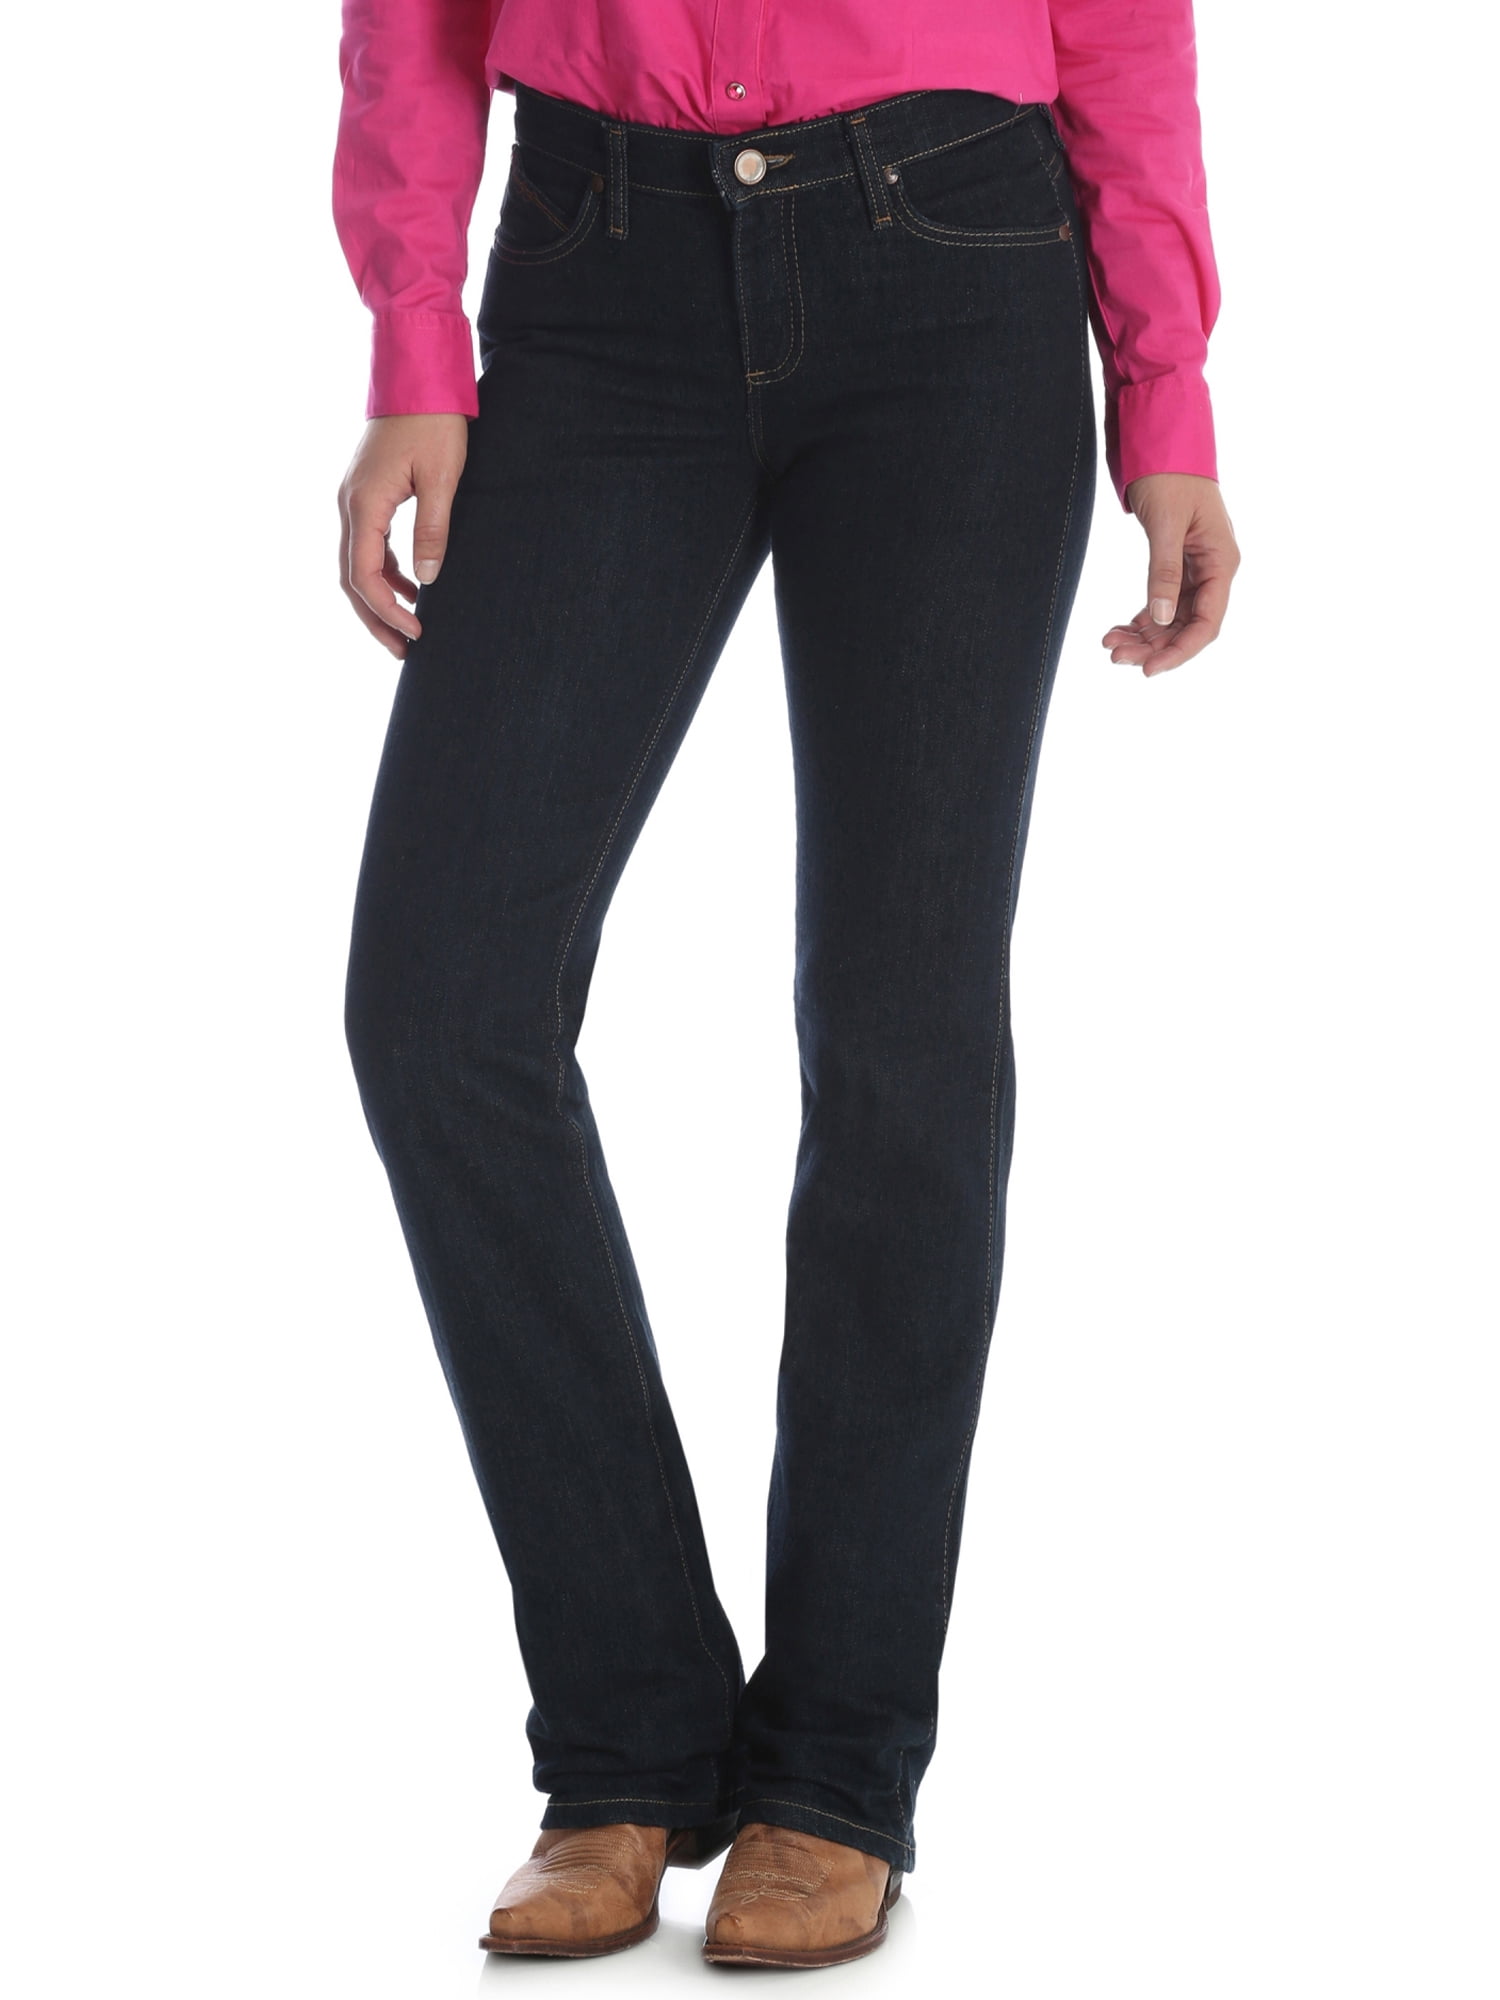 WRANGLER Stretch Cords Jeans Bootcut KATE Women Girls Black Size 10 8 